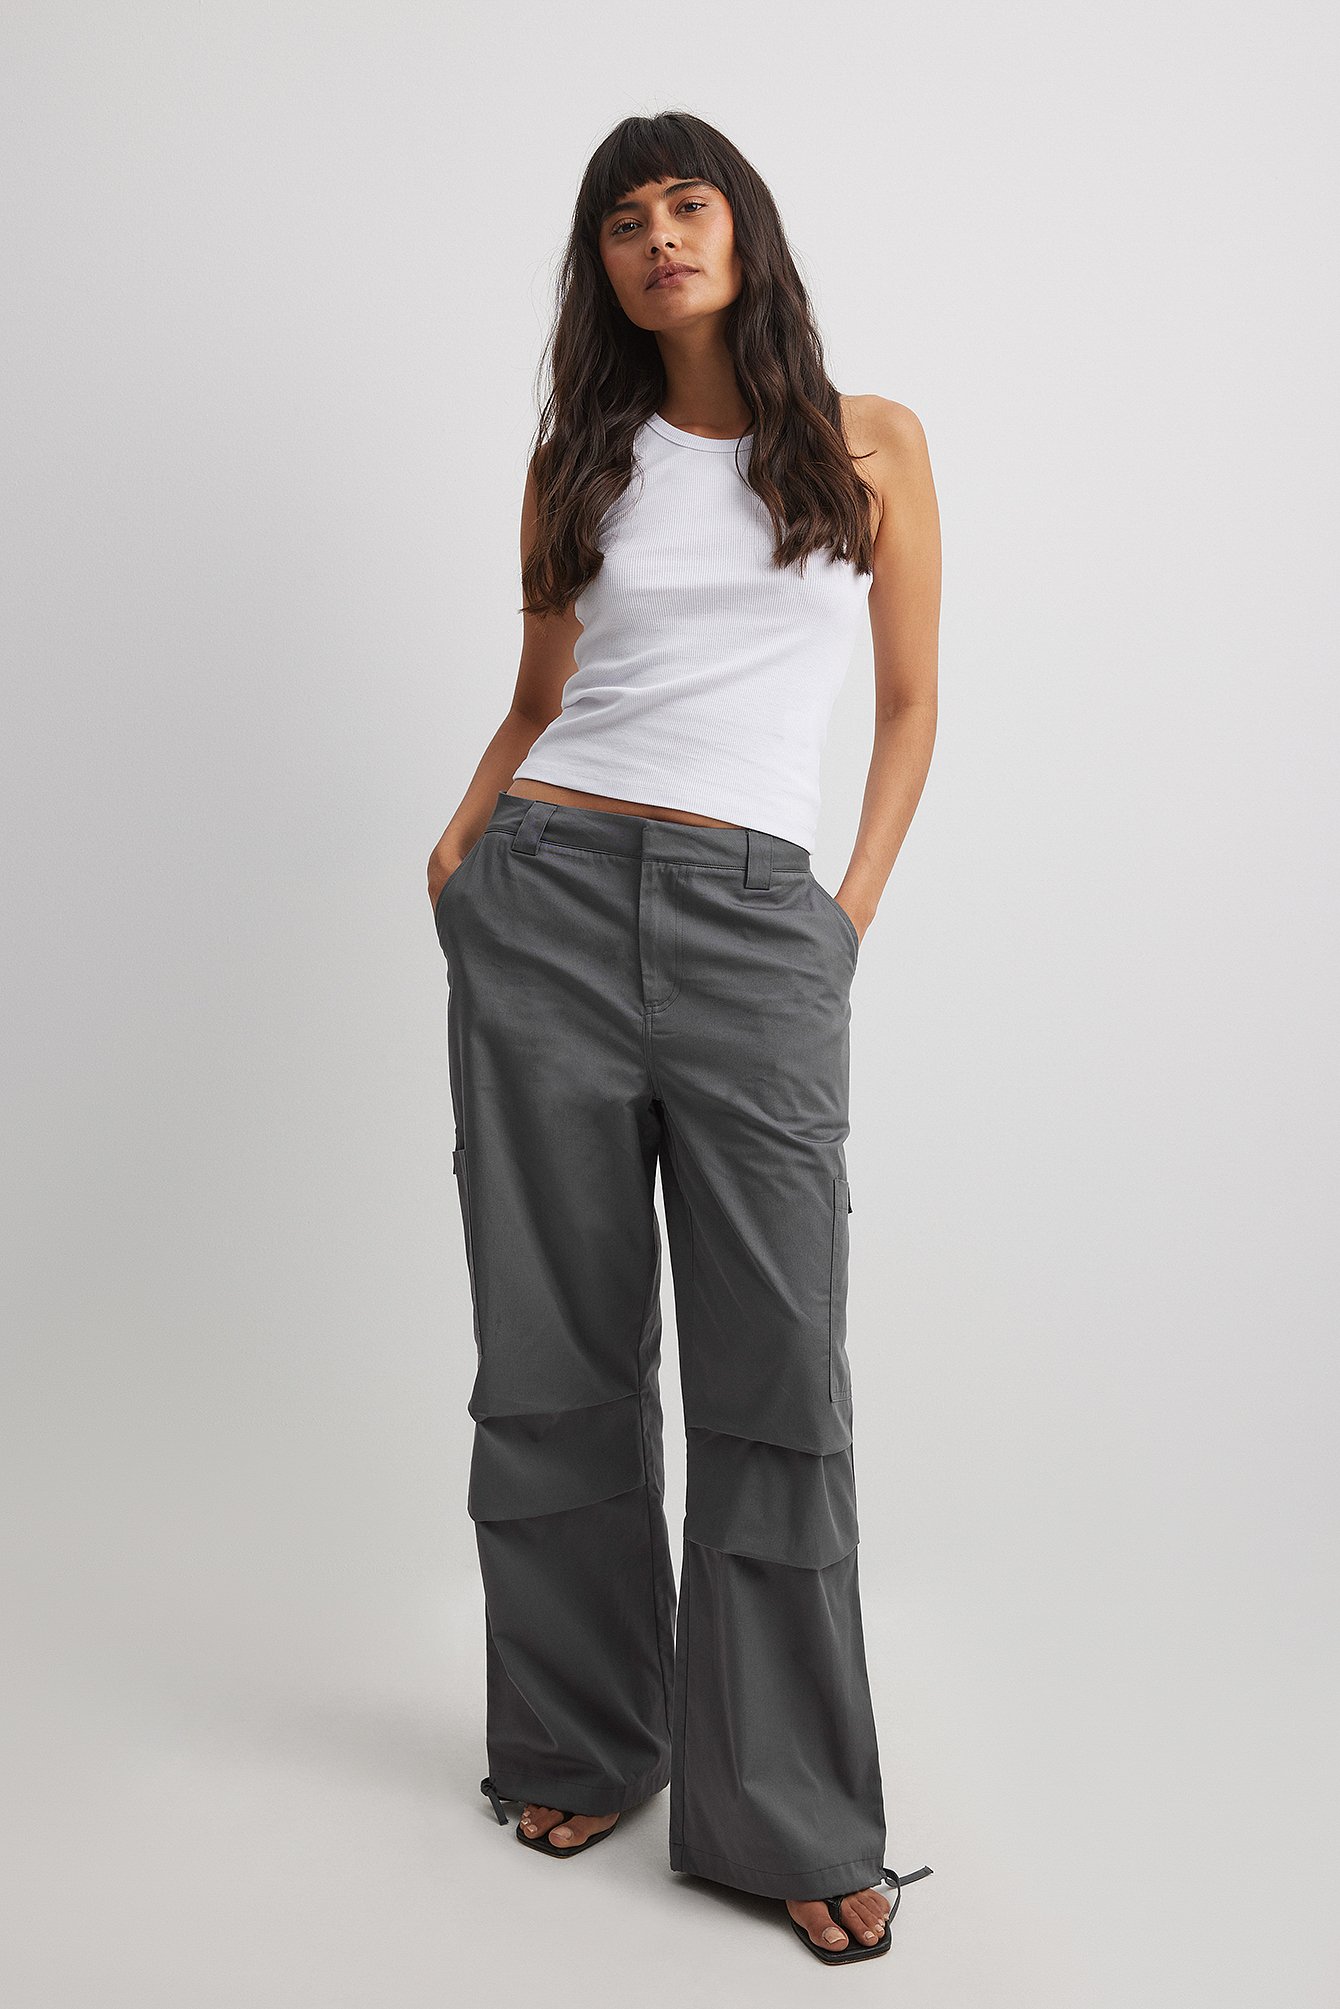 Women's Cargo Pants Pants Trousers Baggy Cuffed Cargo Drawstring